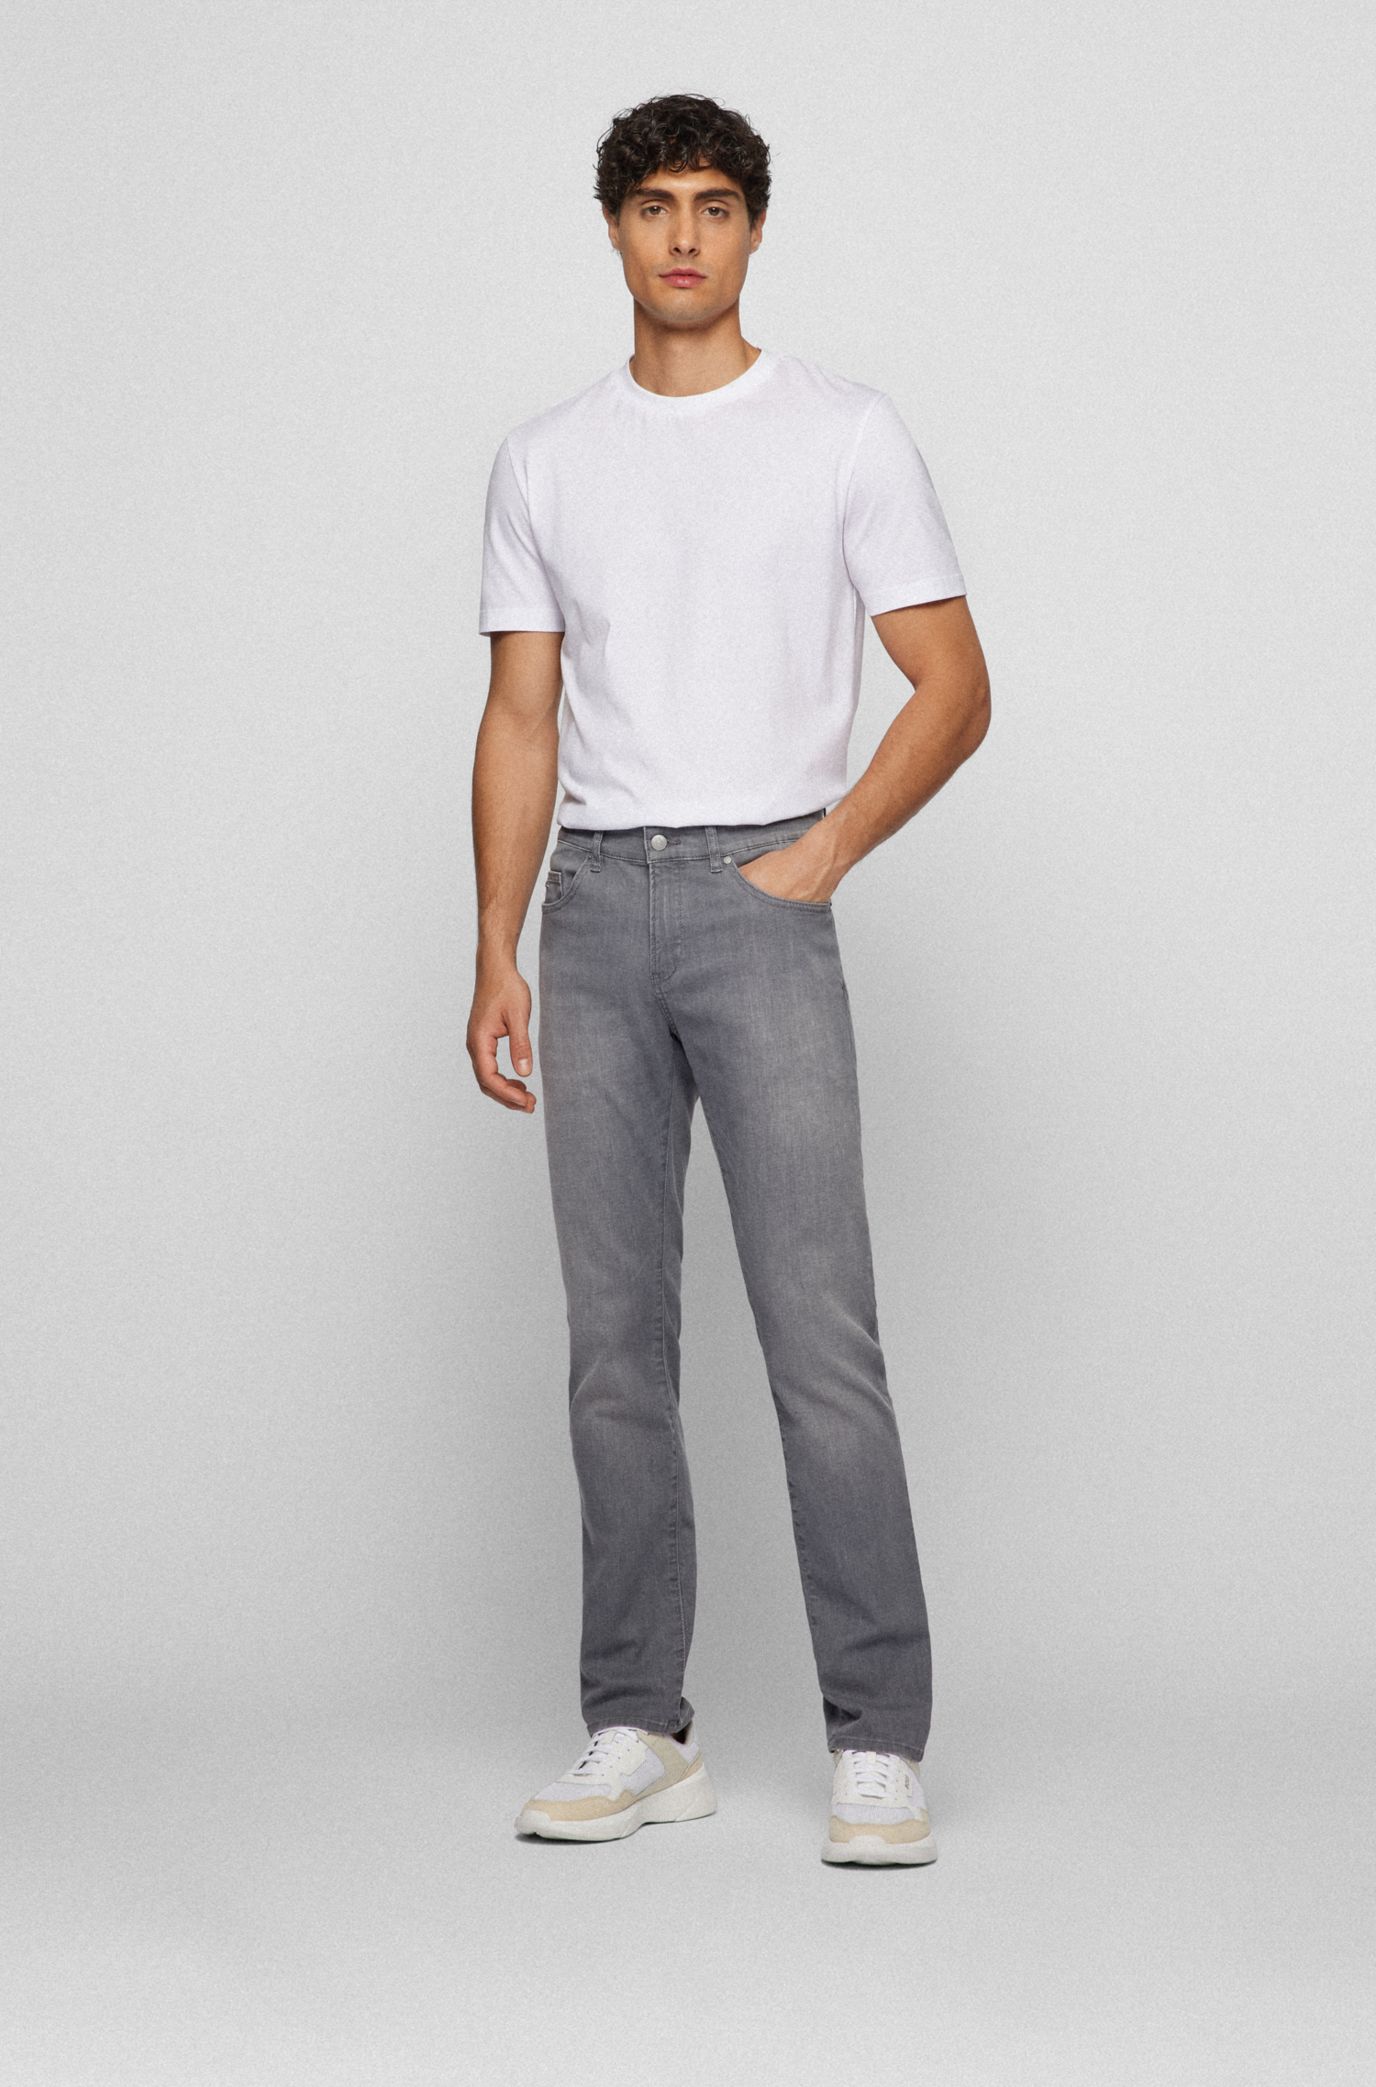 in gray jeans - lightweight denim BOSS Slim-fit